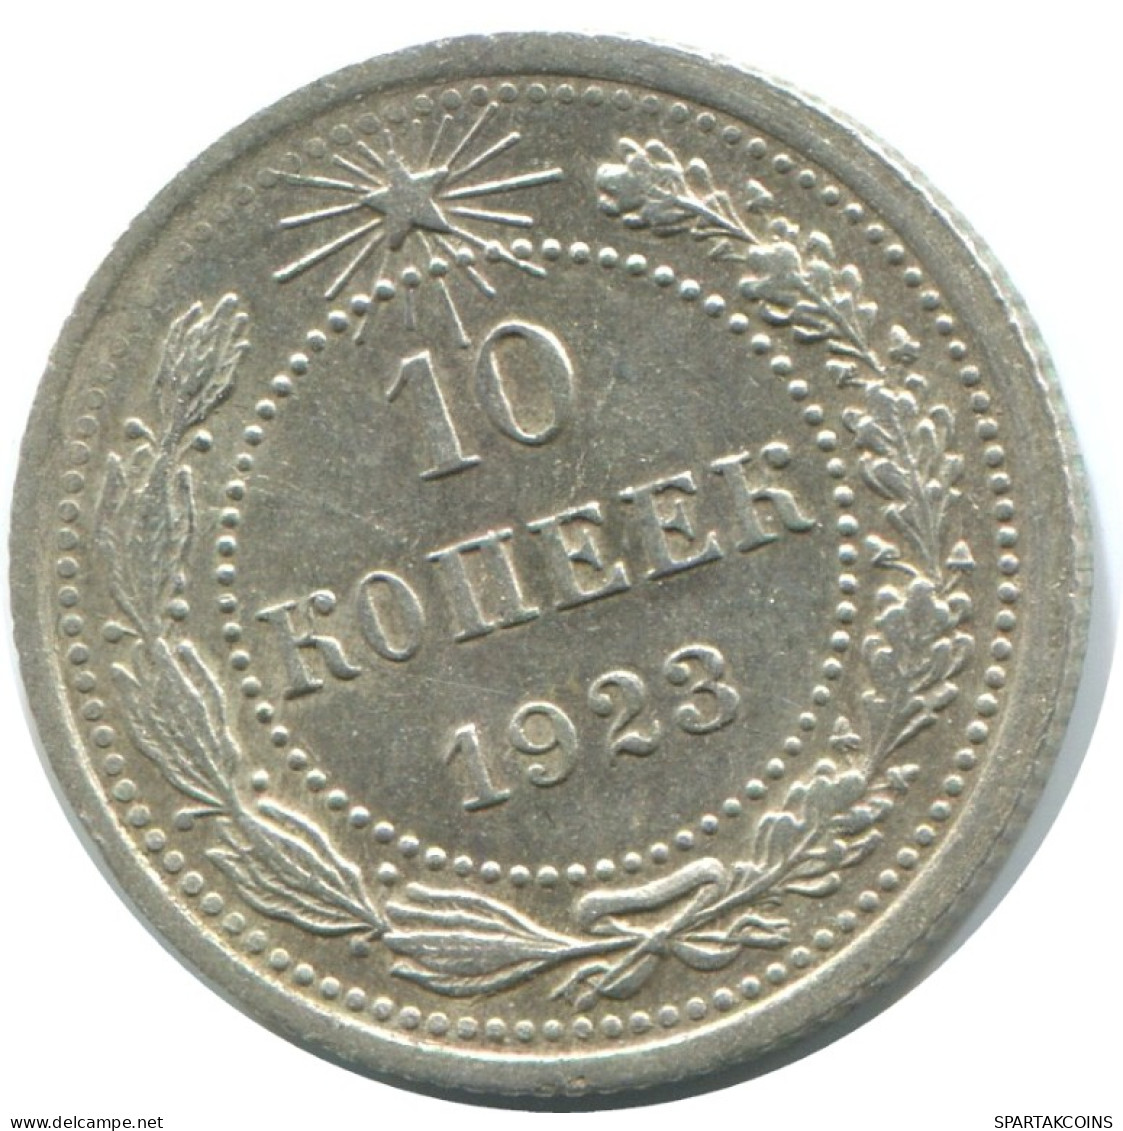 10 KOPEKS 1923 RUSSIA RSFSR SILVER Coin HIGH GRADE #AE952.4.U.A - Russia